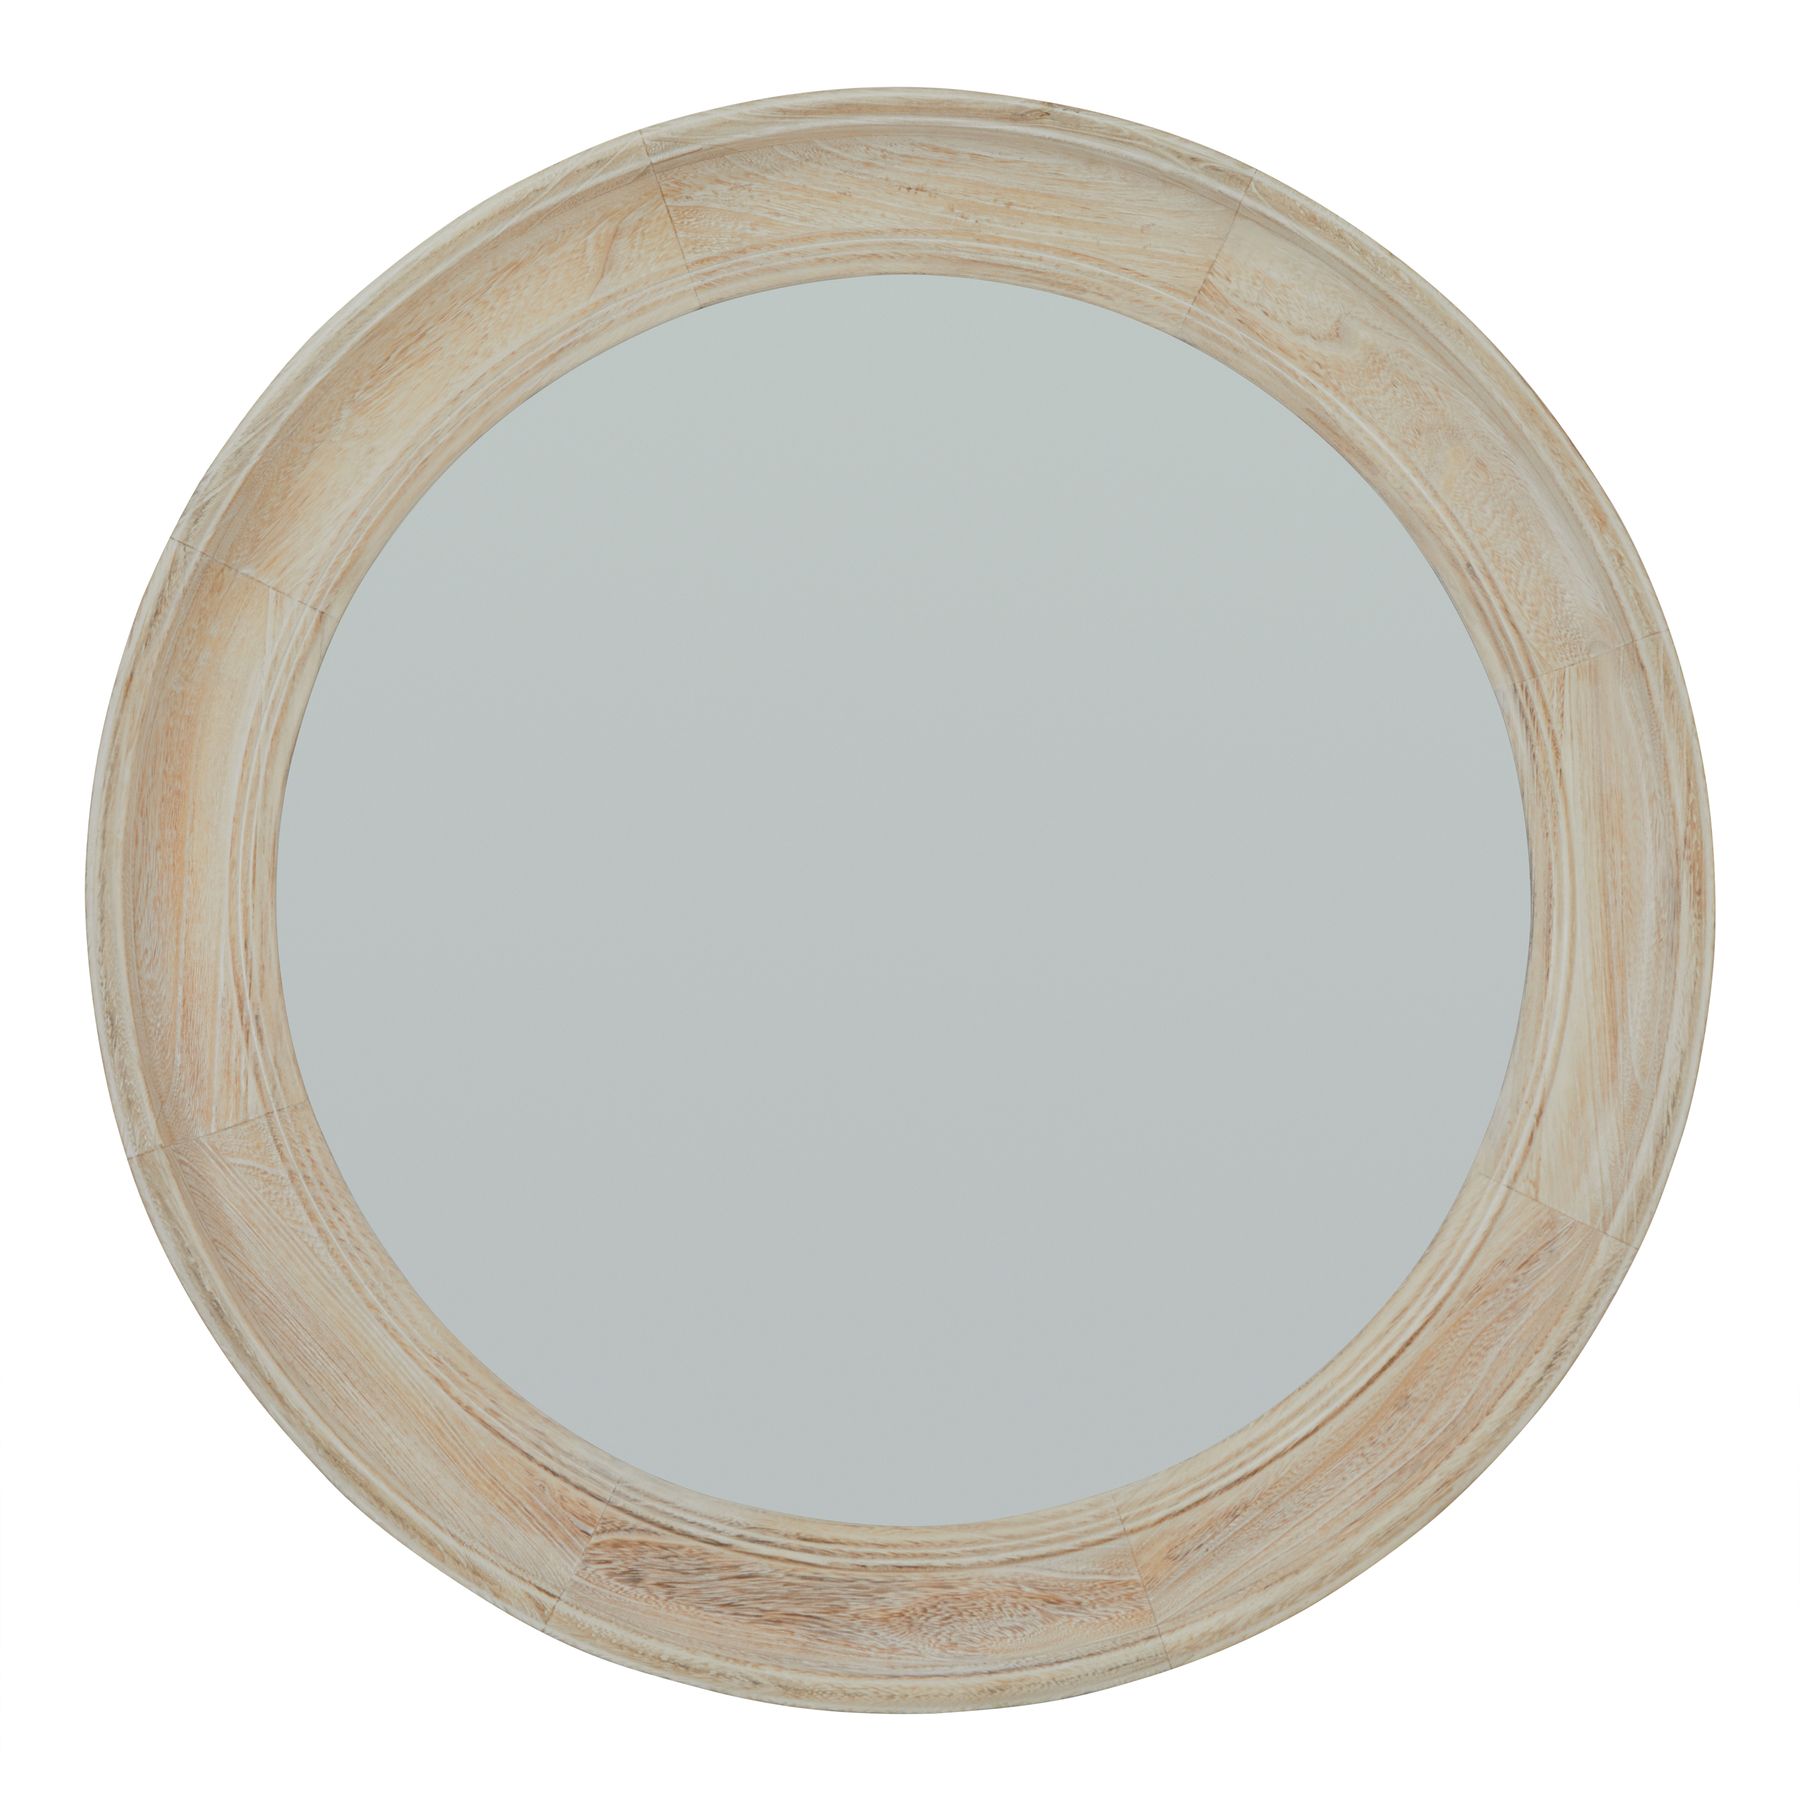 Washed Wood Round Framed Mirror - Image 1